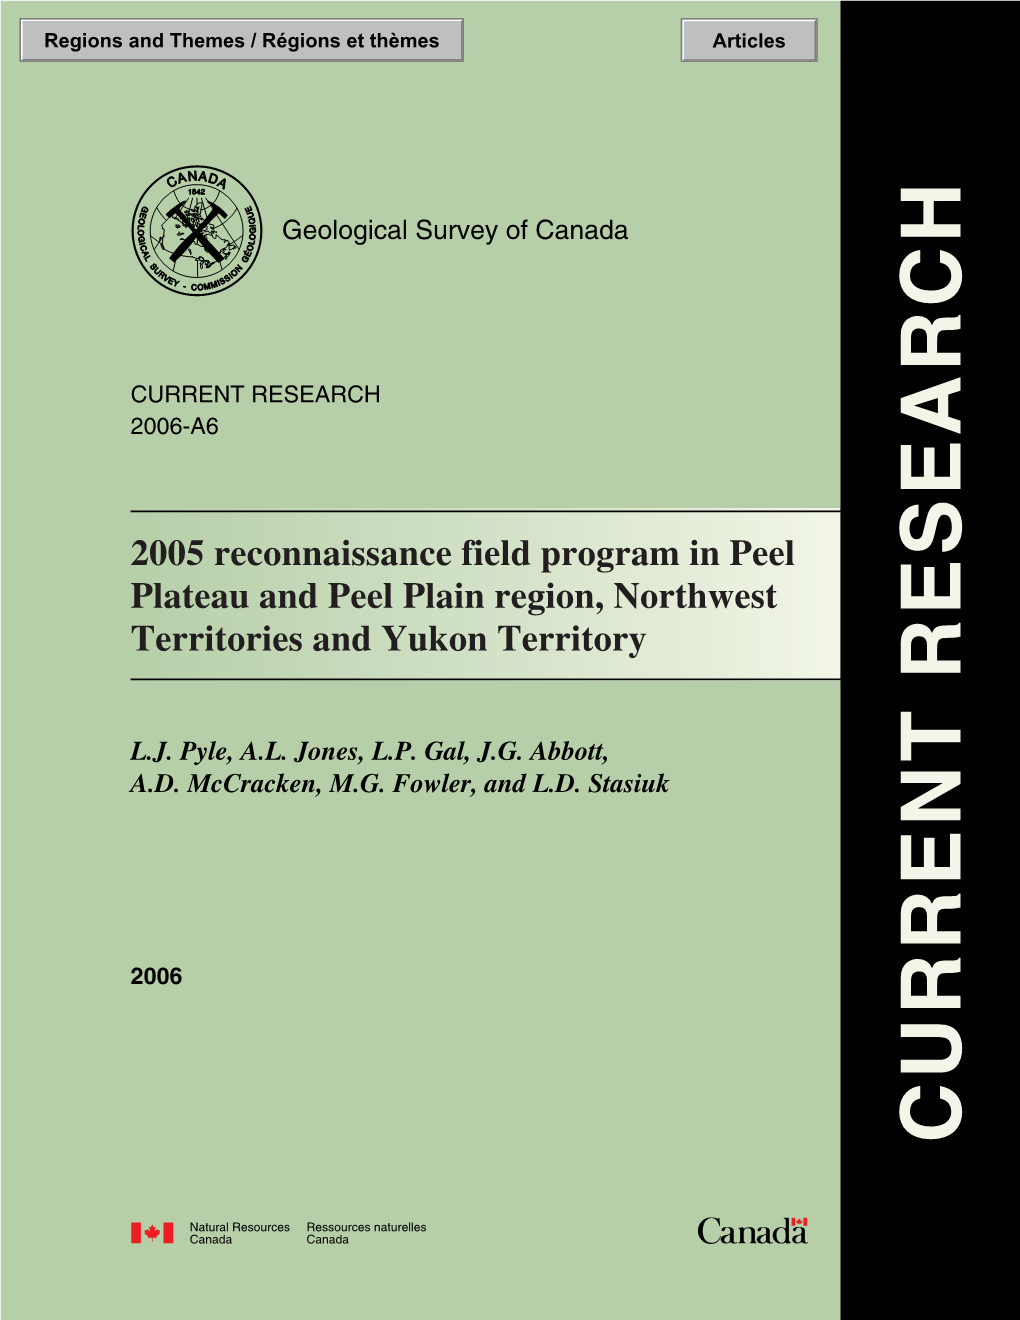 2005 Reconnaissance Field Program in Peel Plateau and Peel Plain Region, Northwest Territories and Yukon Territory